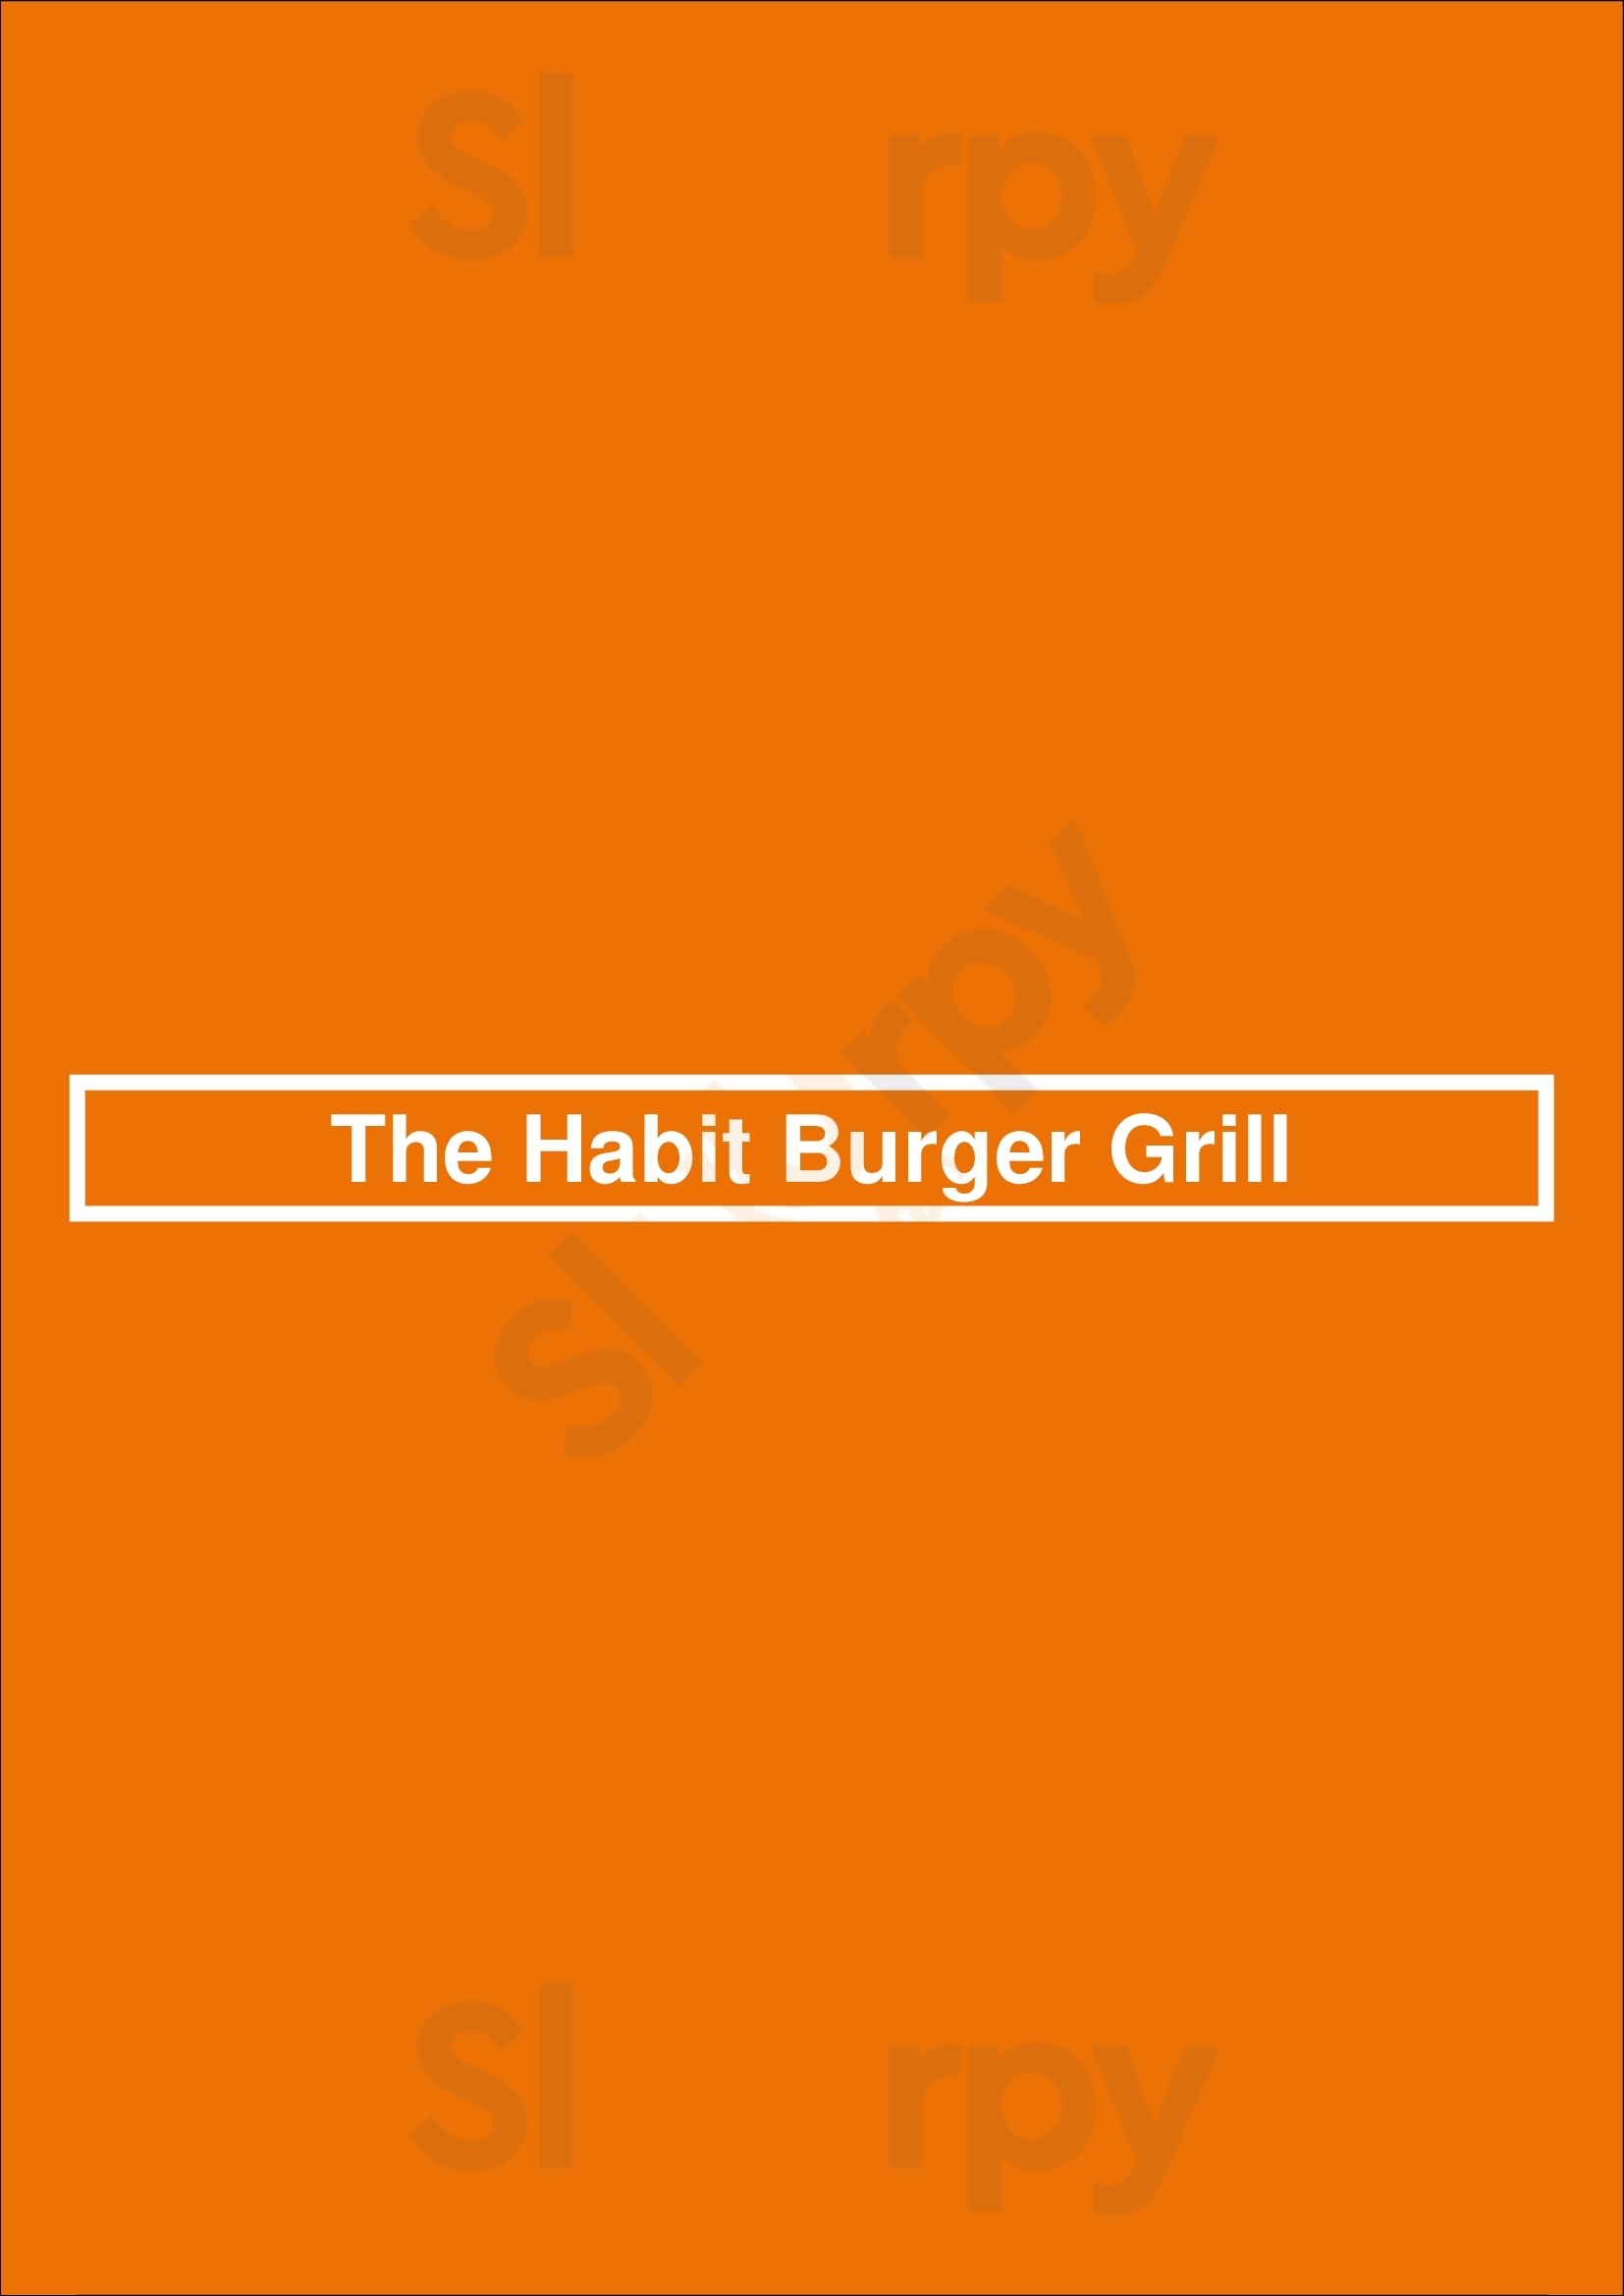 The Habit Burger Grill Salt Lake City Menu - 1